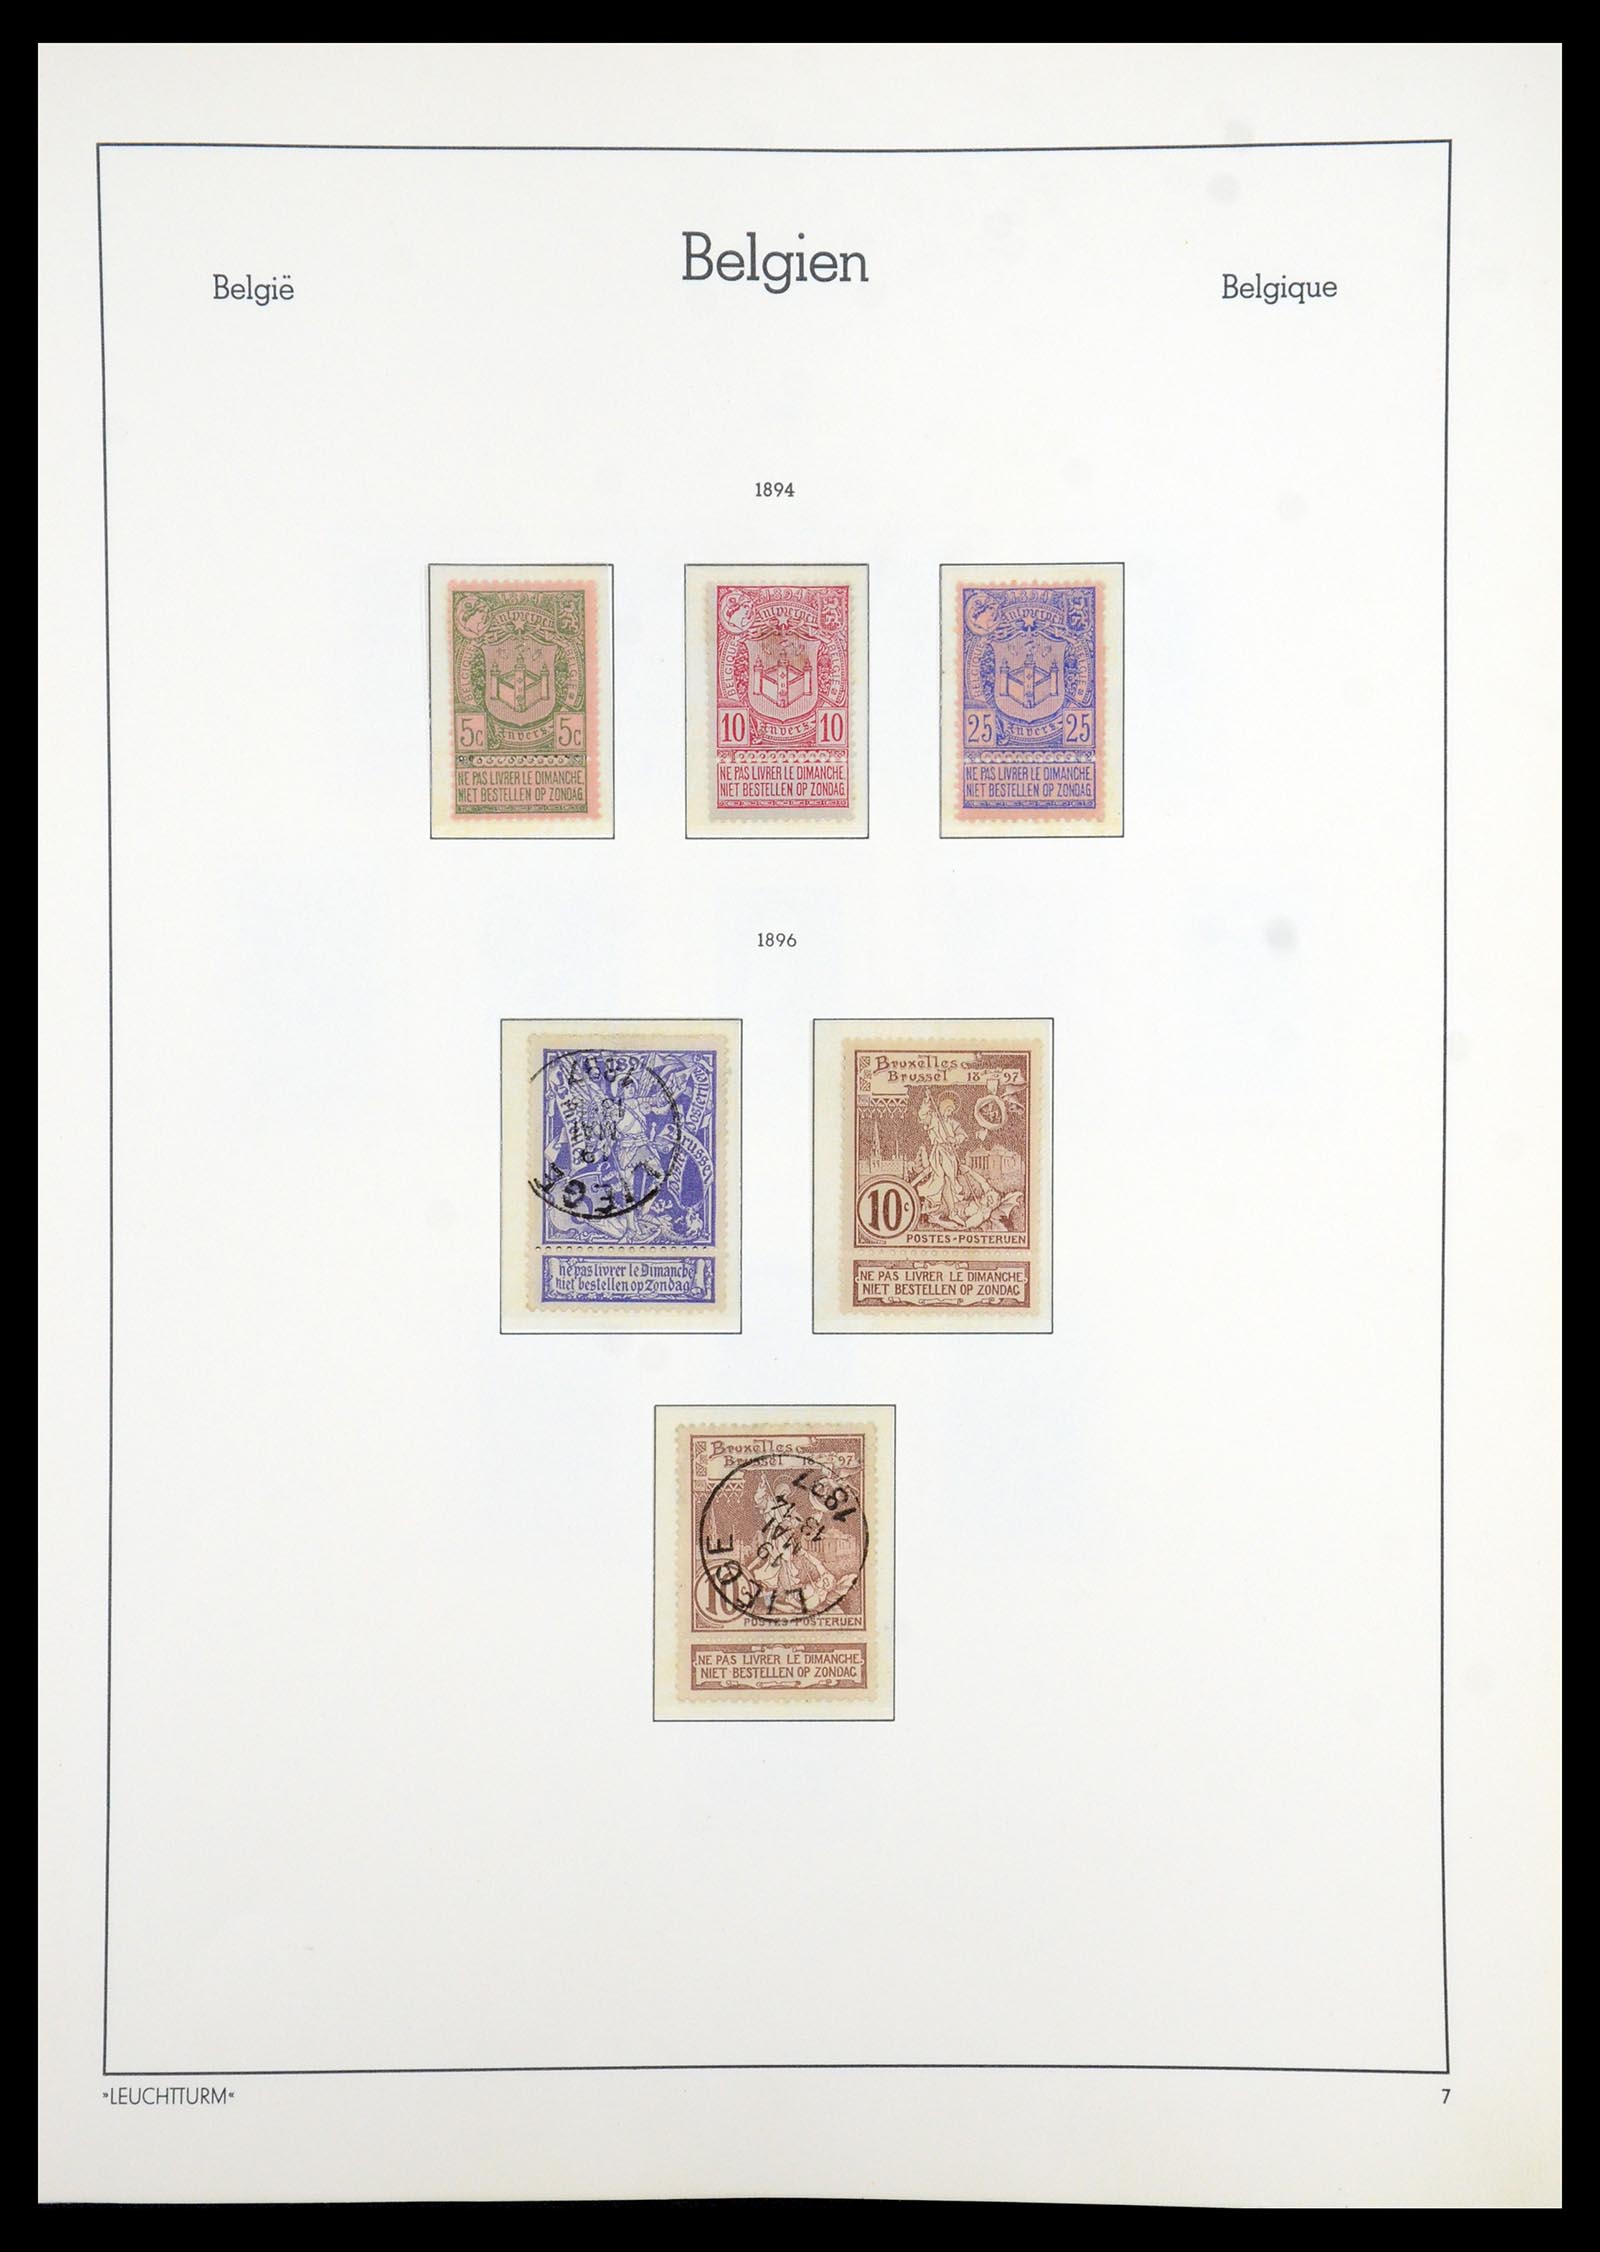 35785 009 - Stamp Collection 35785 Belgium 1849-1960.